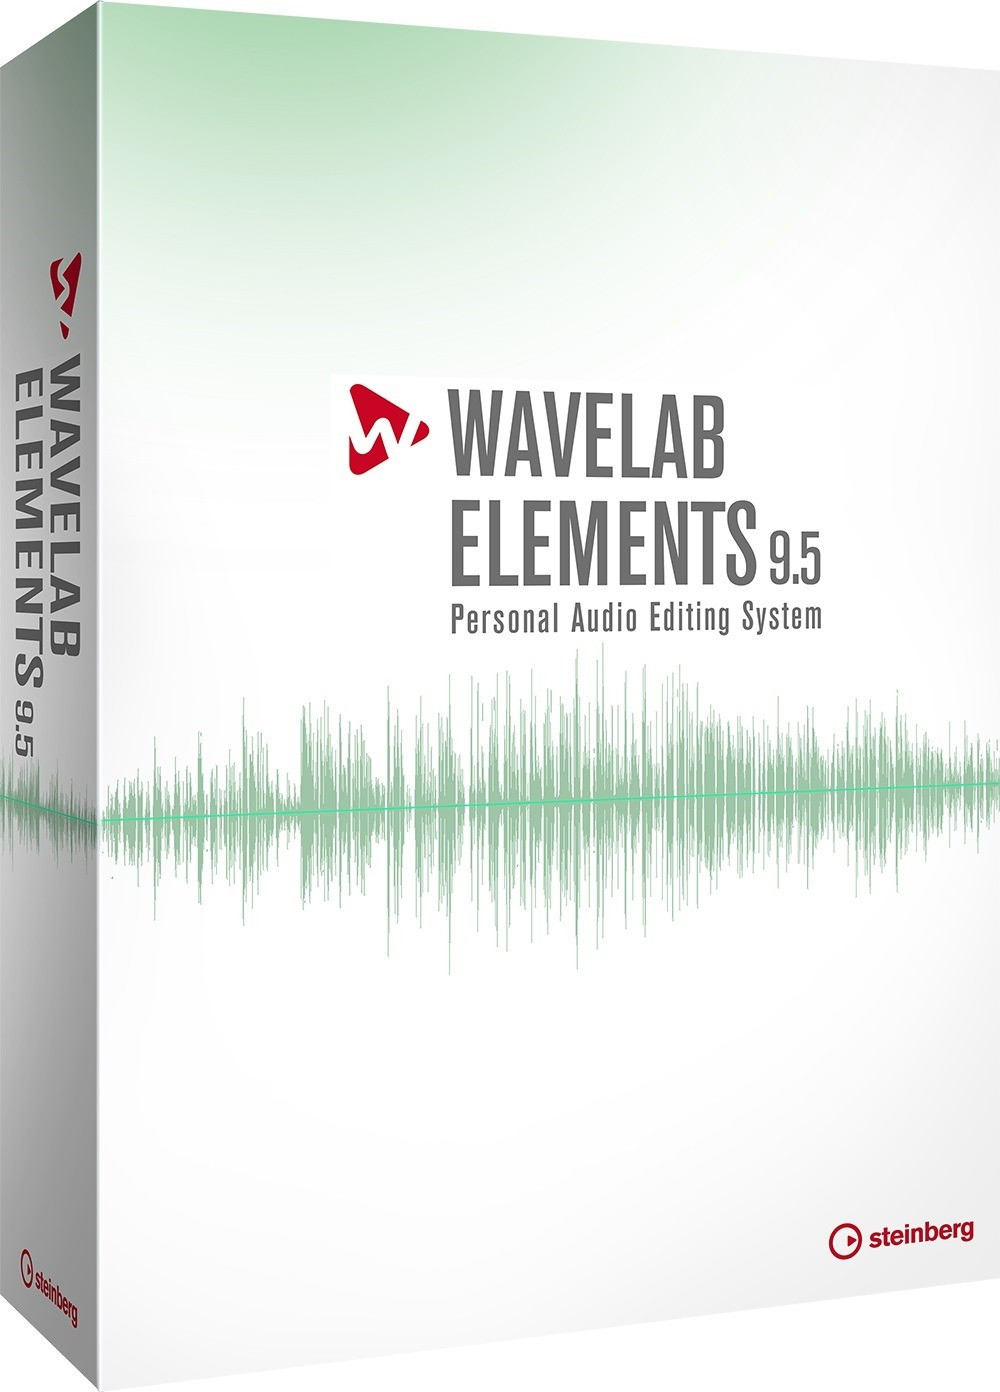 wavelab elements